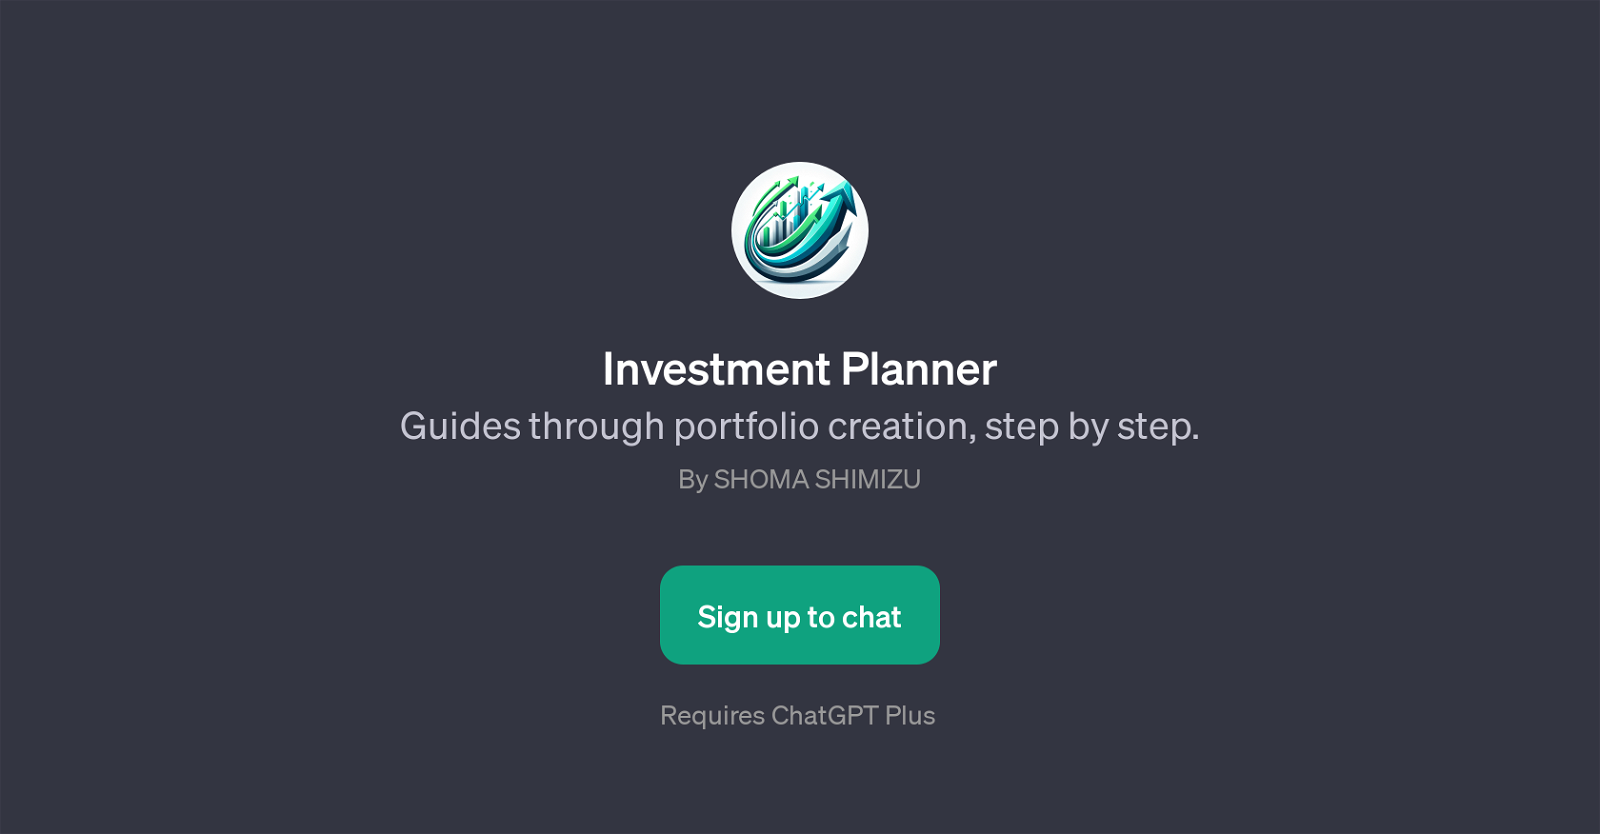 Investment Planner website